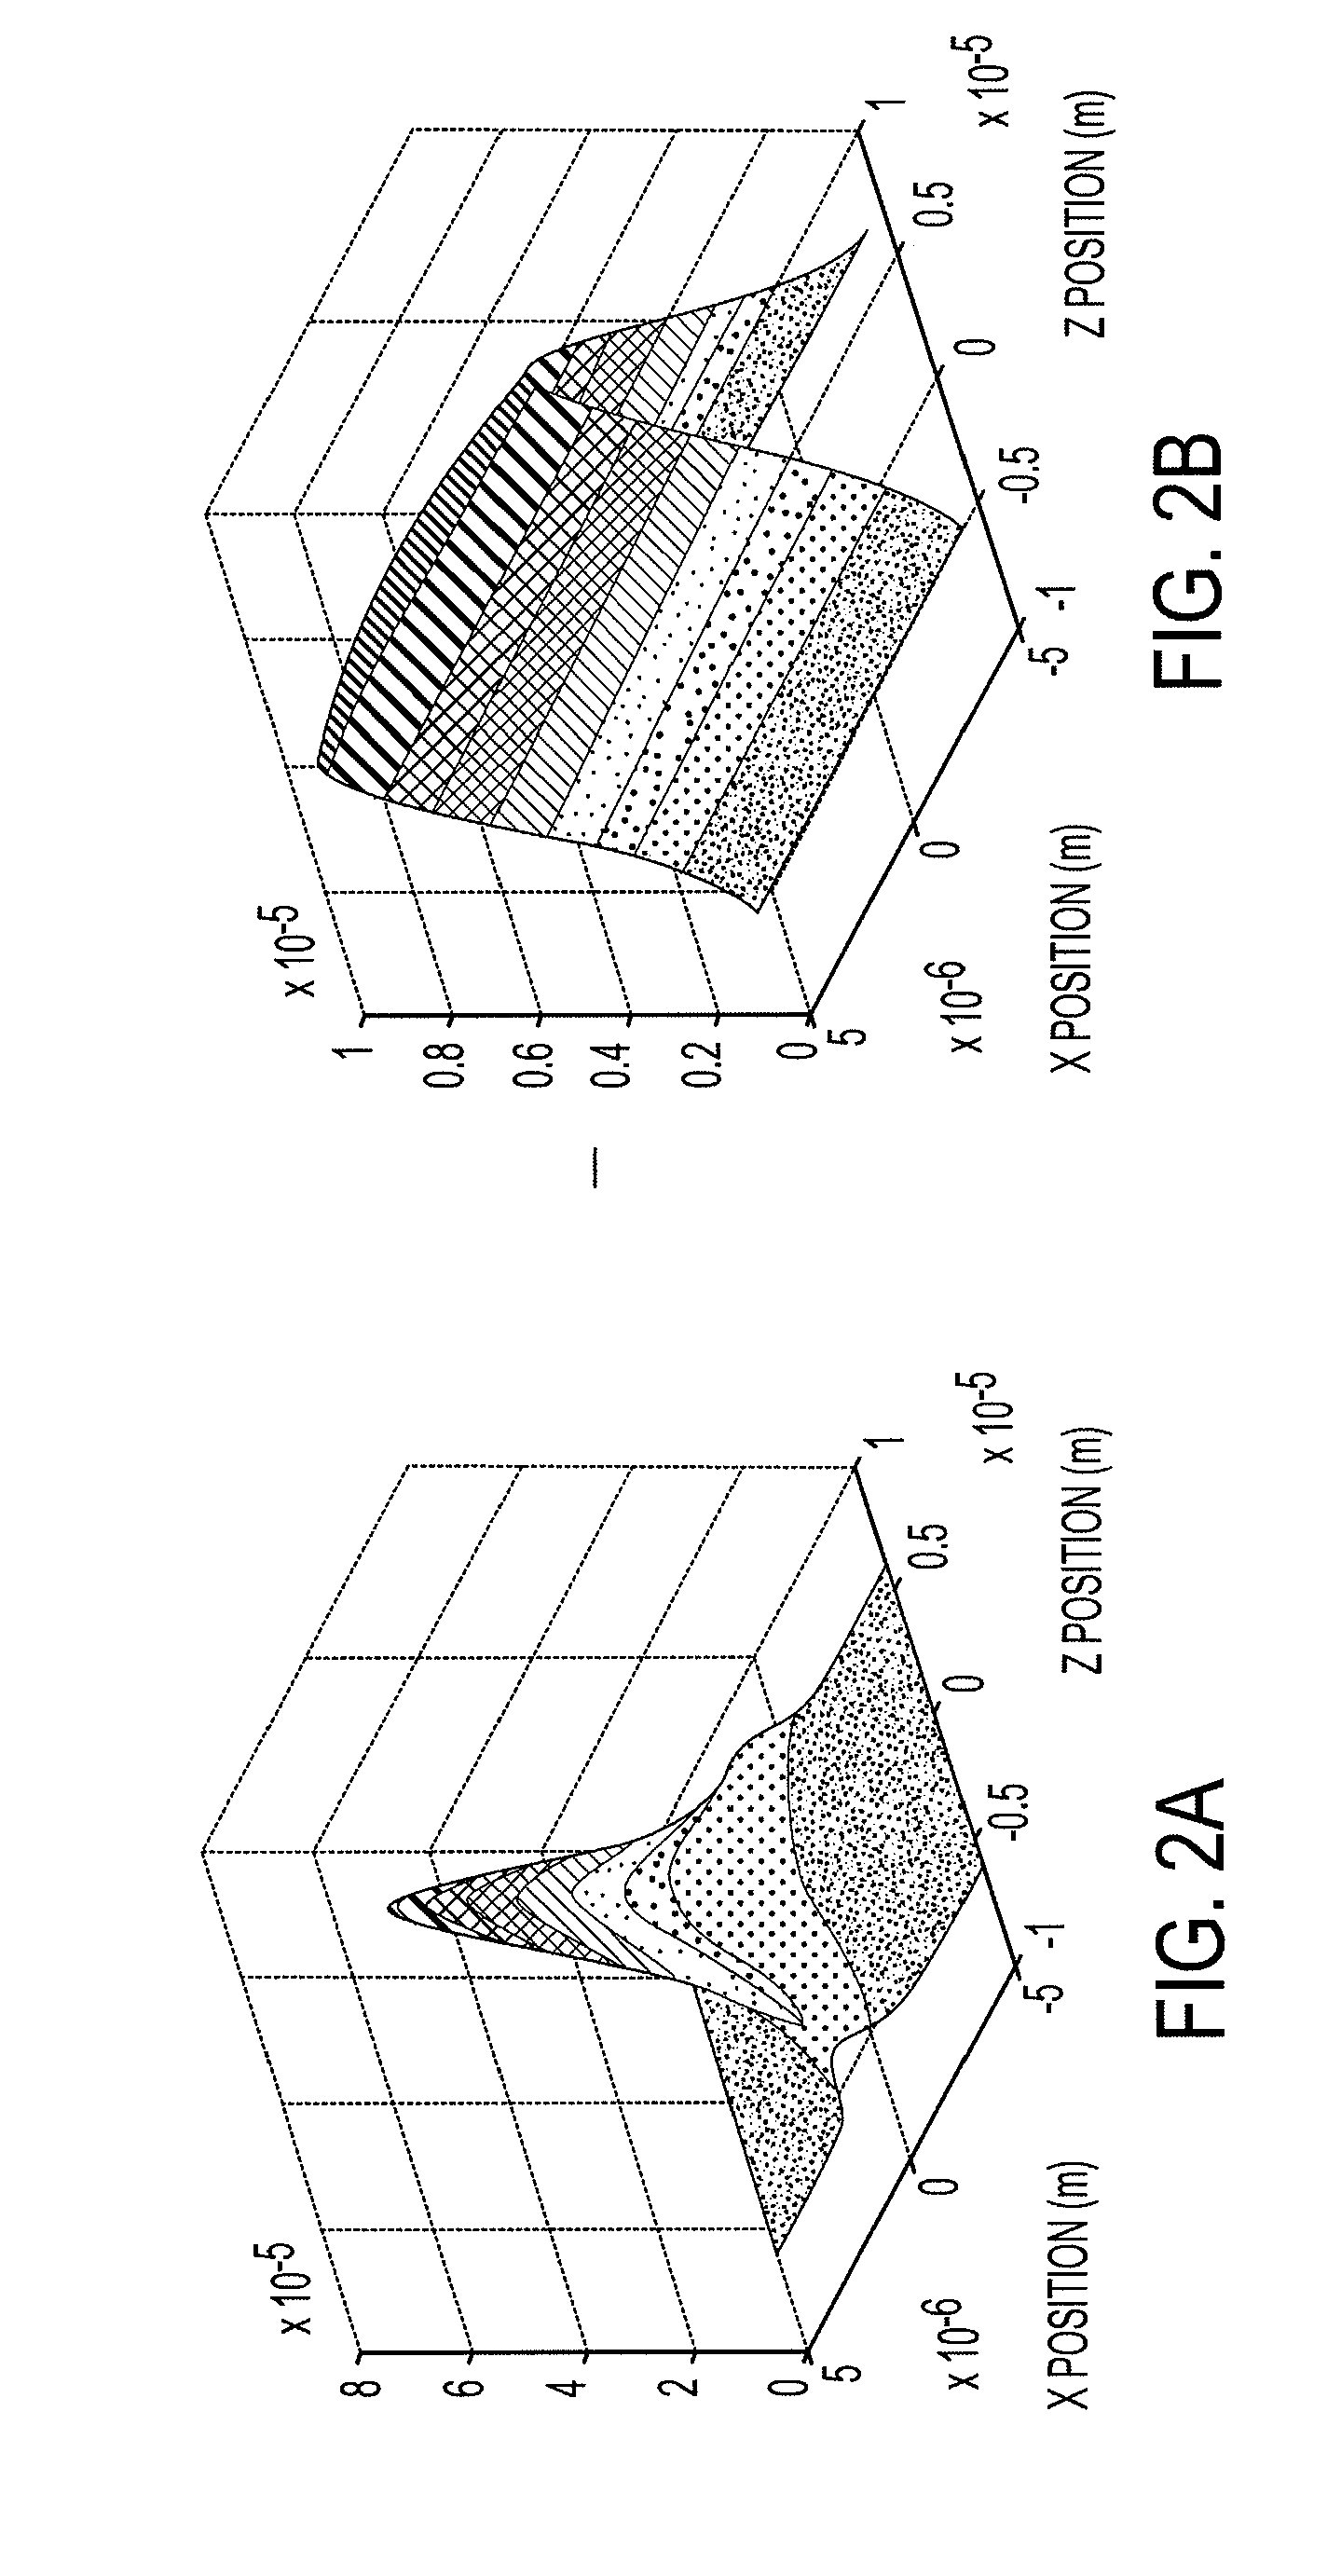 Cylindrical illumination confocal spectroscopy system